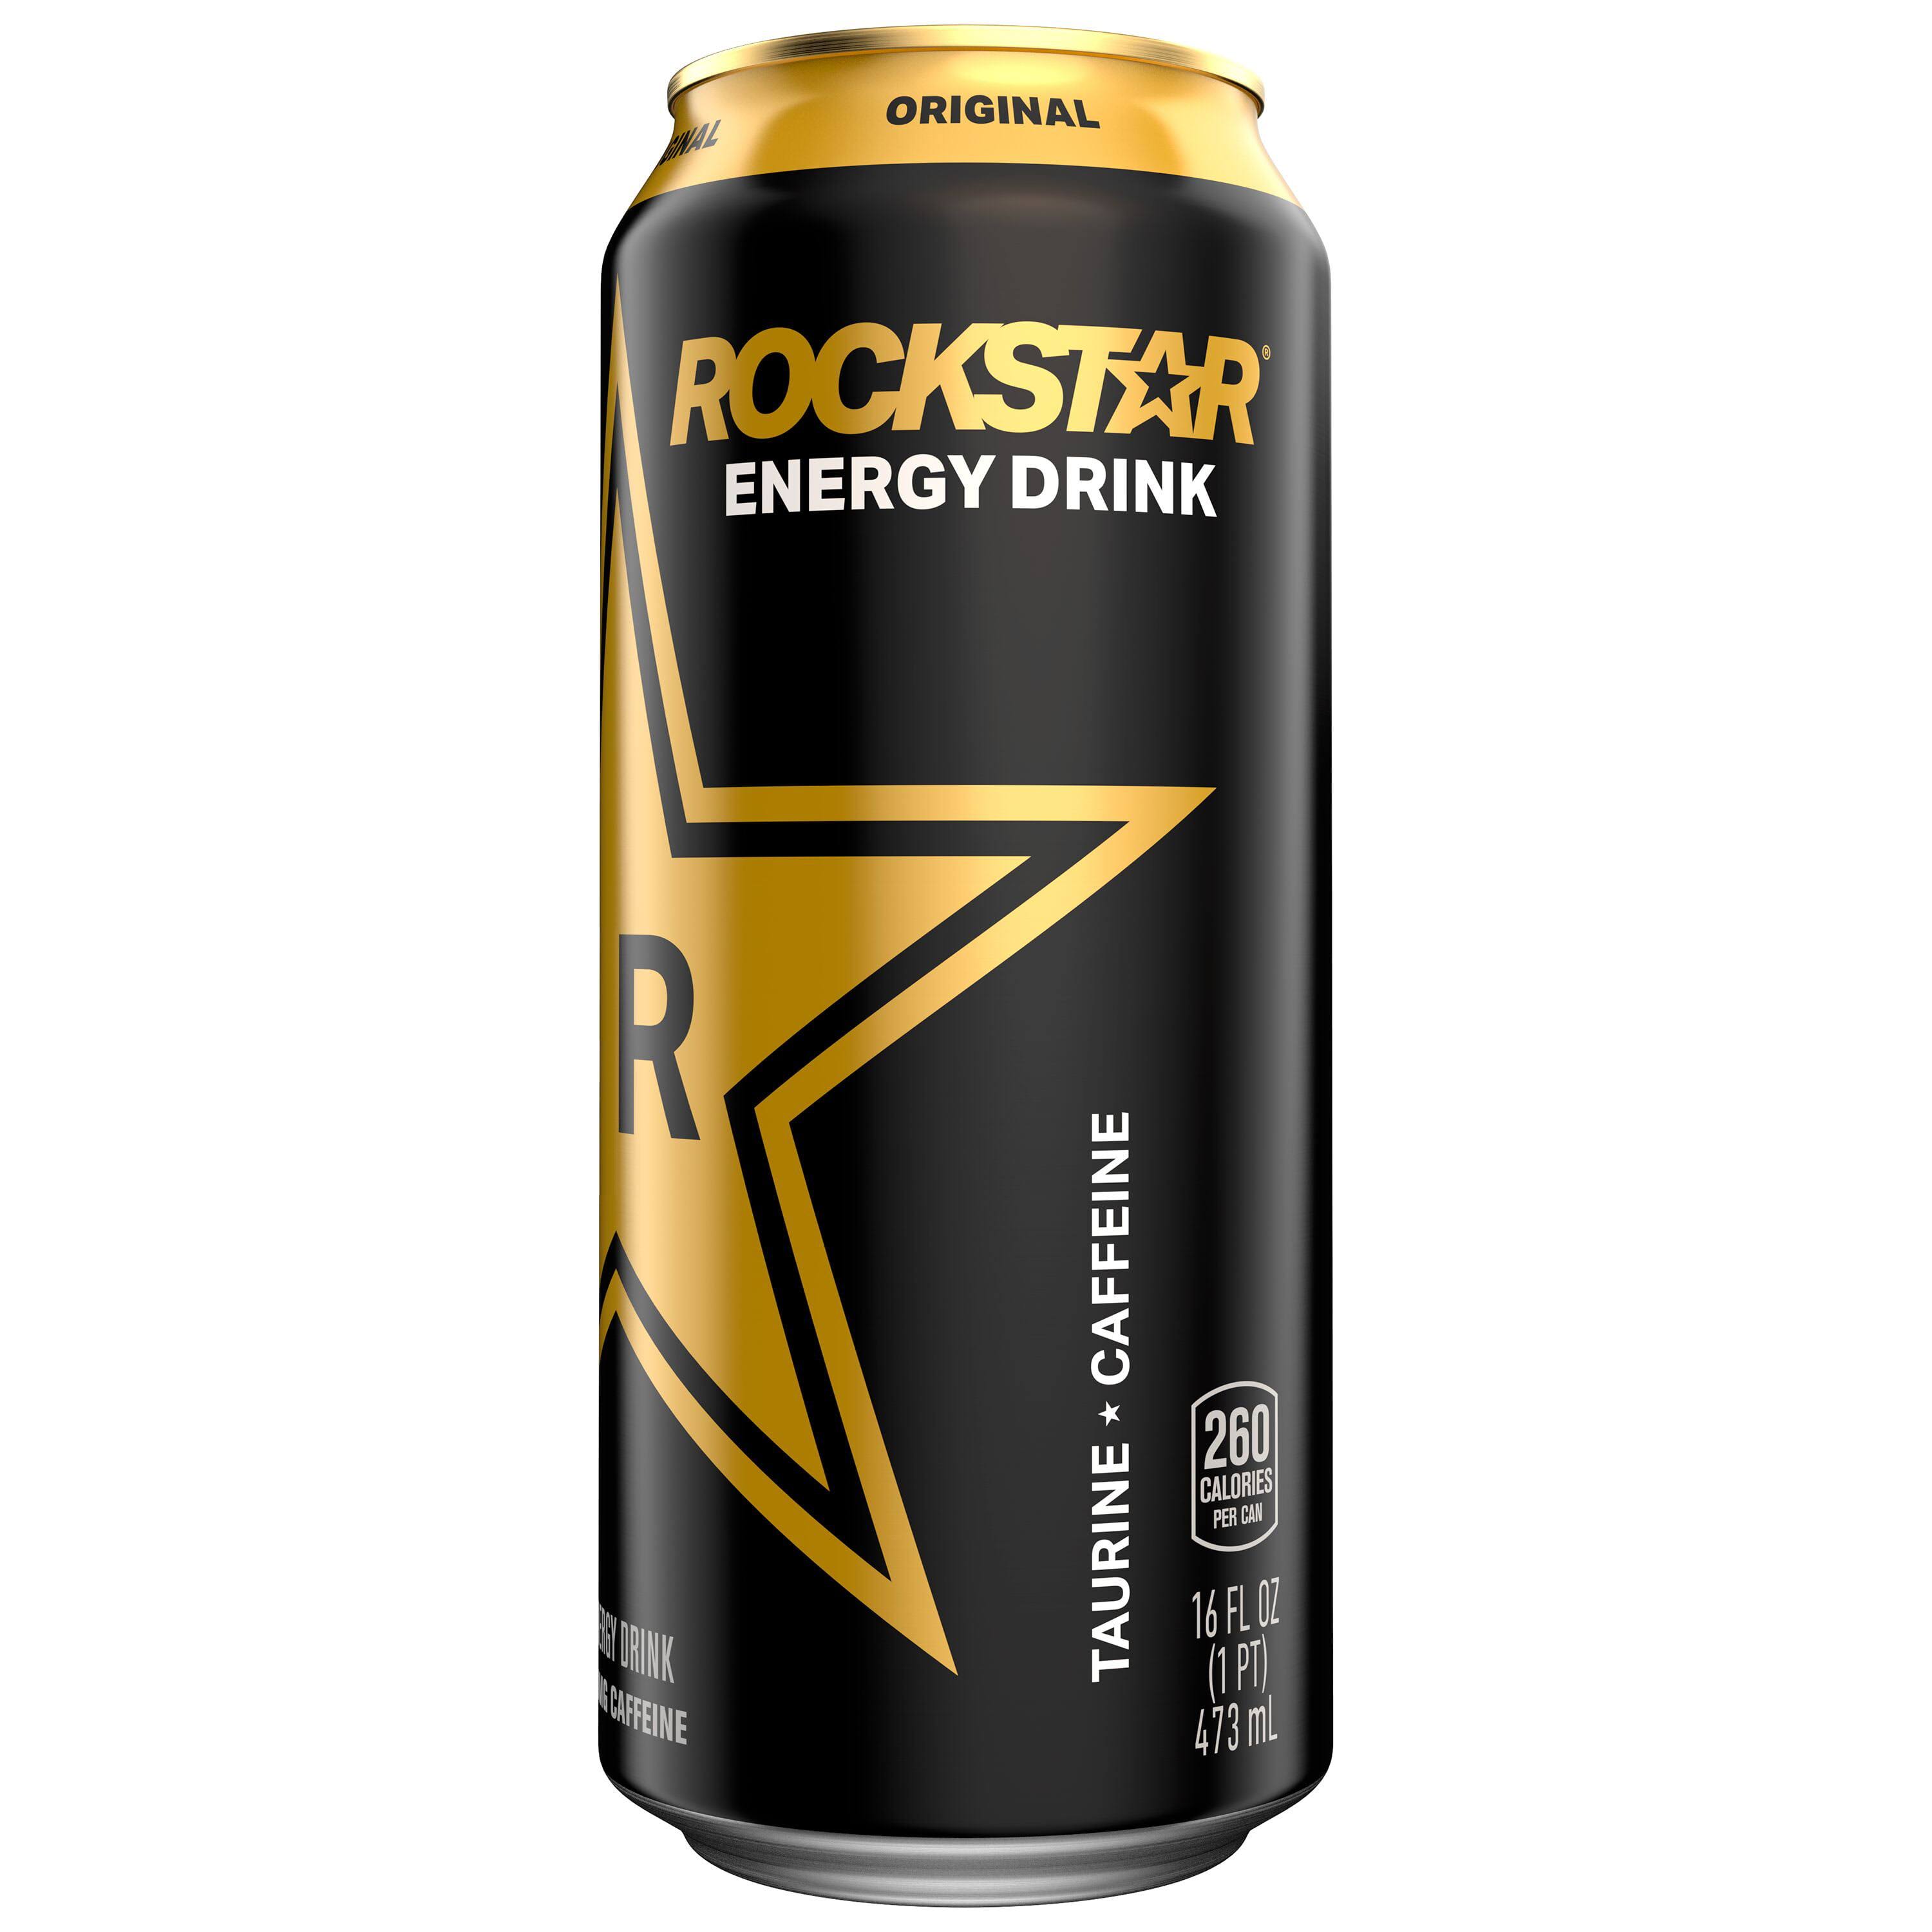 Rockstar Energy Drink, Original - 16 fl oz